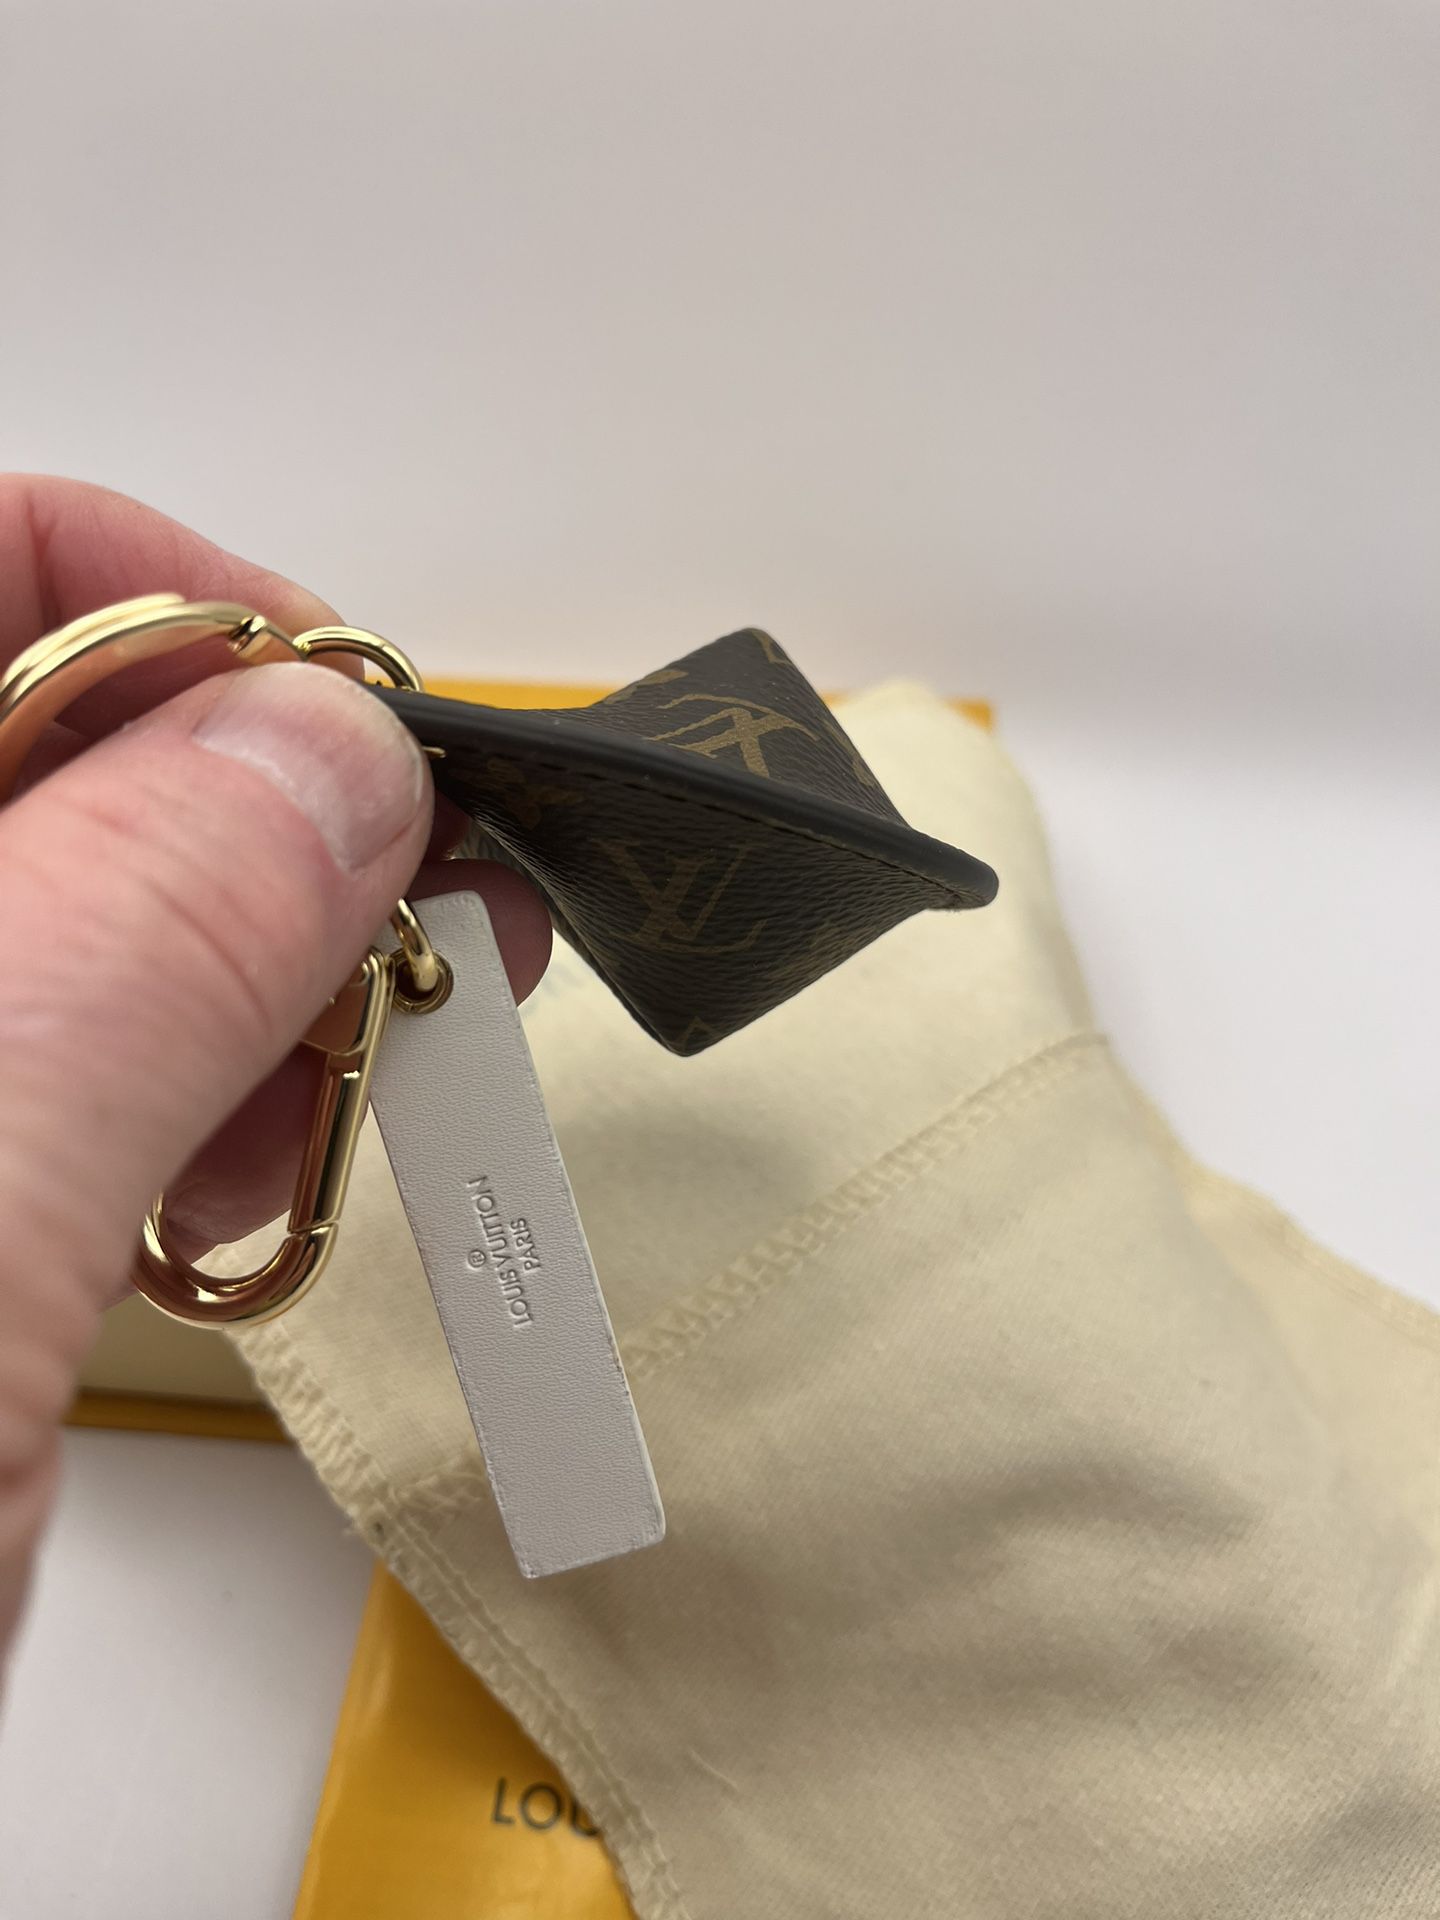 Louis Vuitton 2023 Rare Monogram Fortune Cookie Bag Charm Key Holder